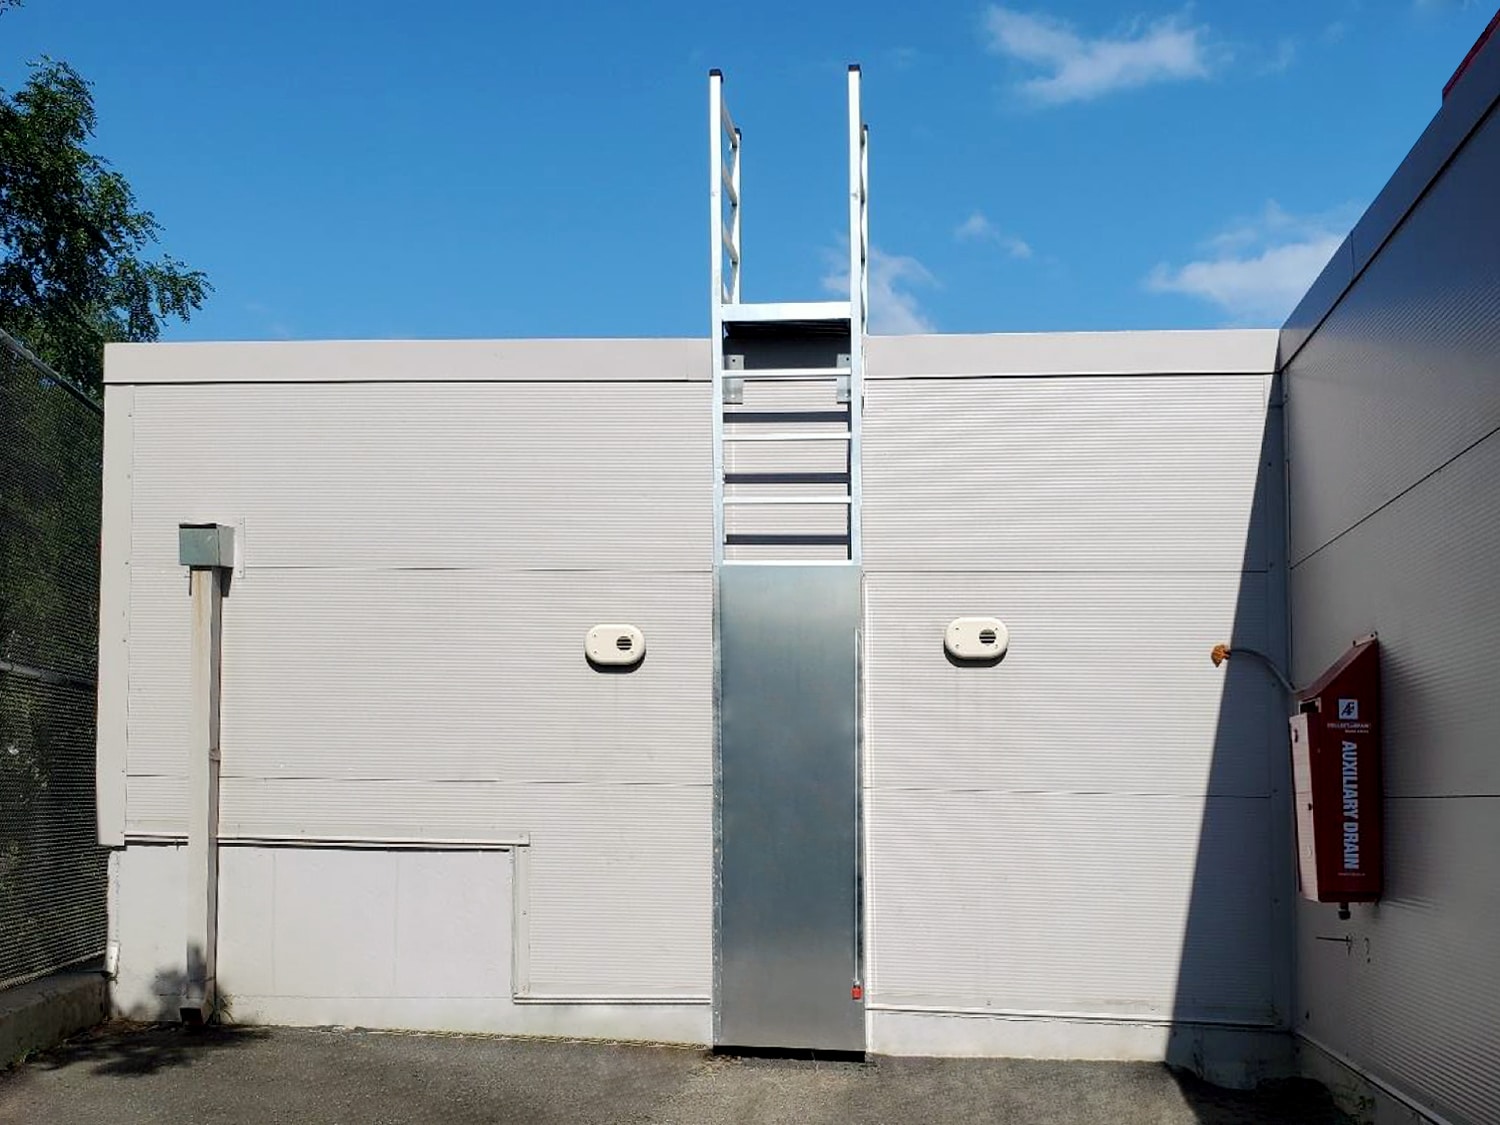 Ladder lockout wide - Safety Platforms